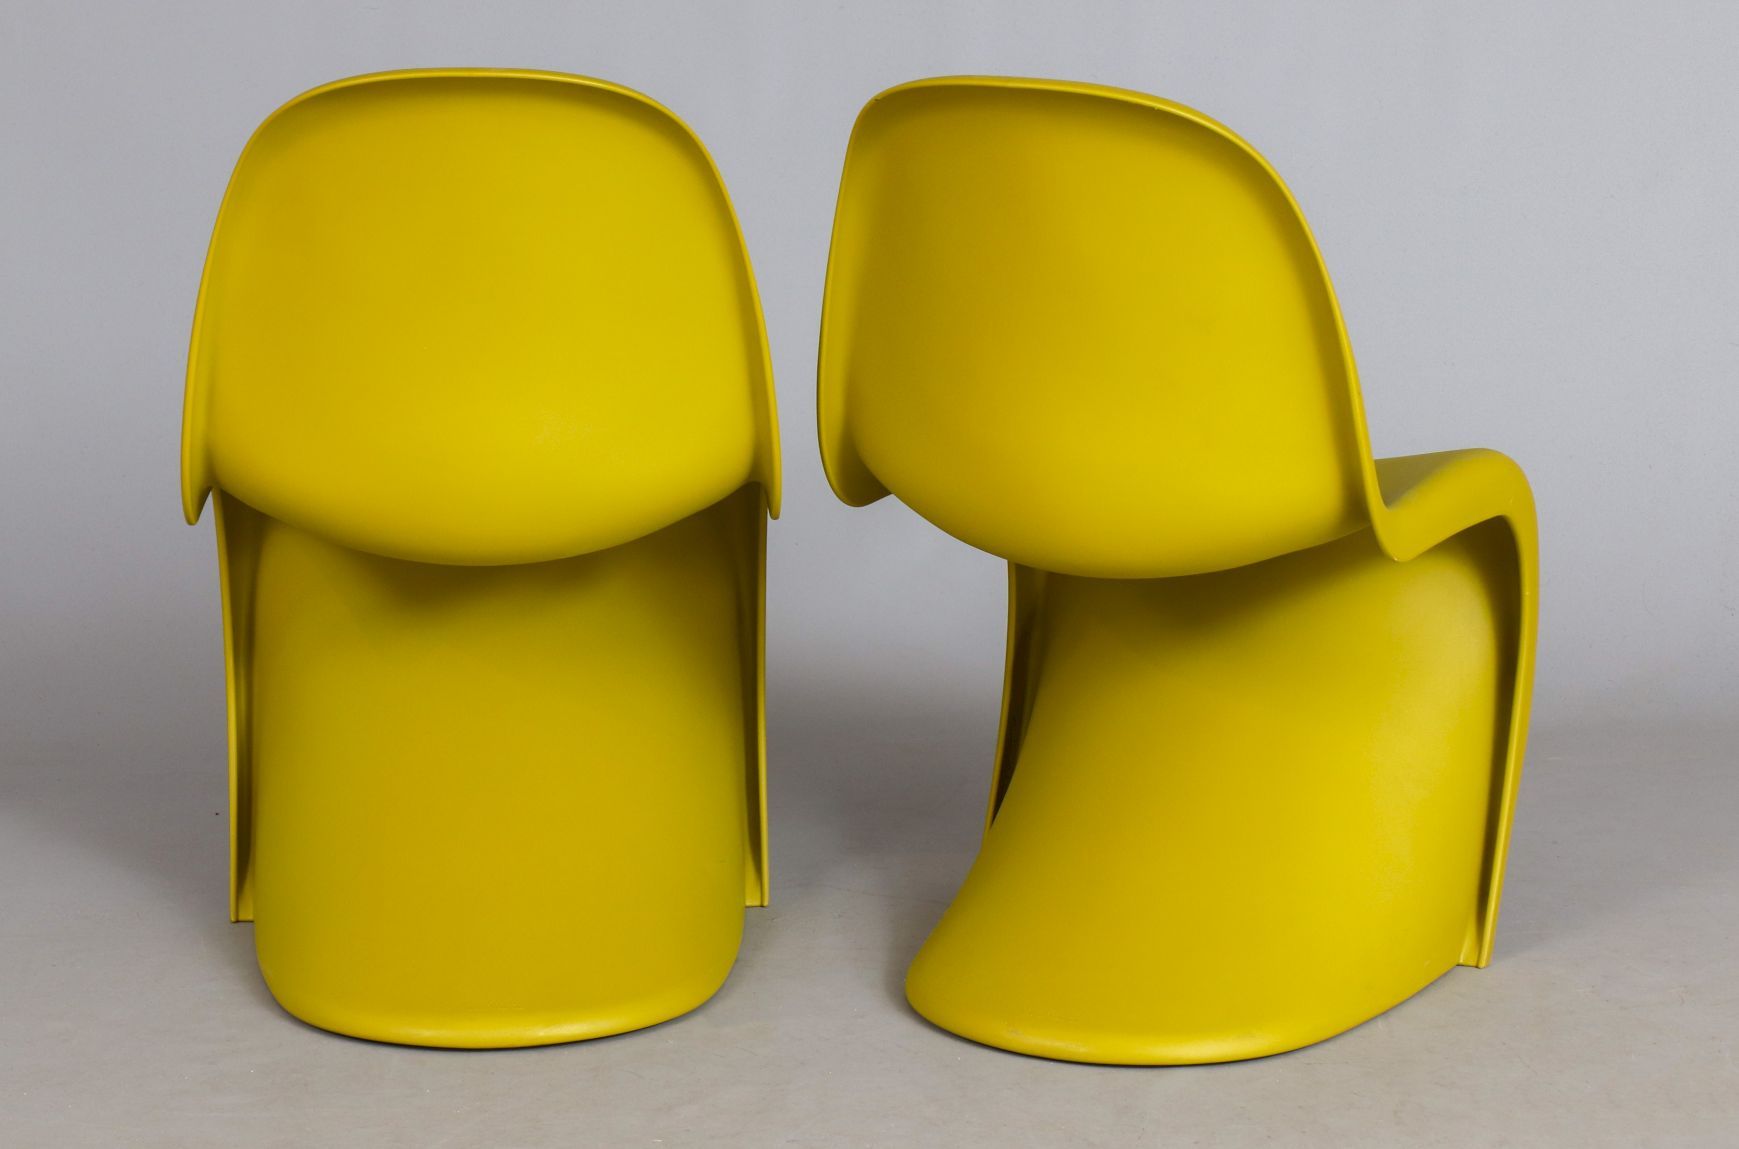 4 VITRA Verner PANTON ¨Panton chairs¨ - Image 2 of 3